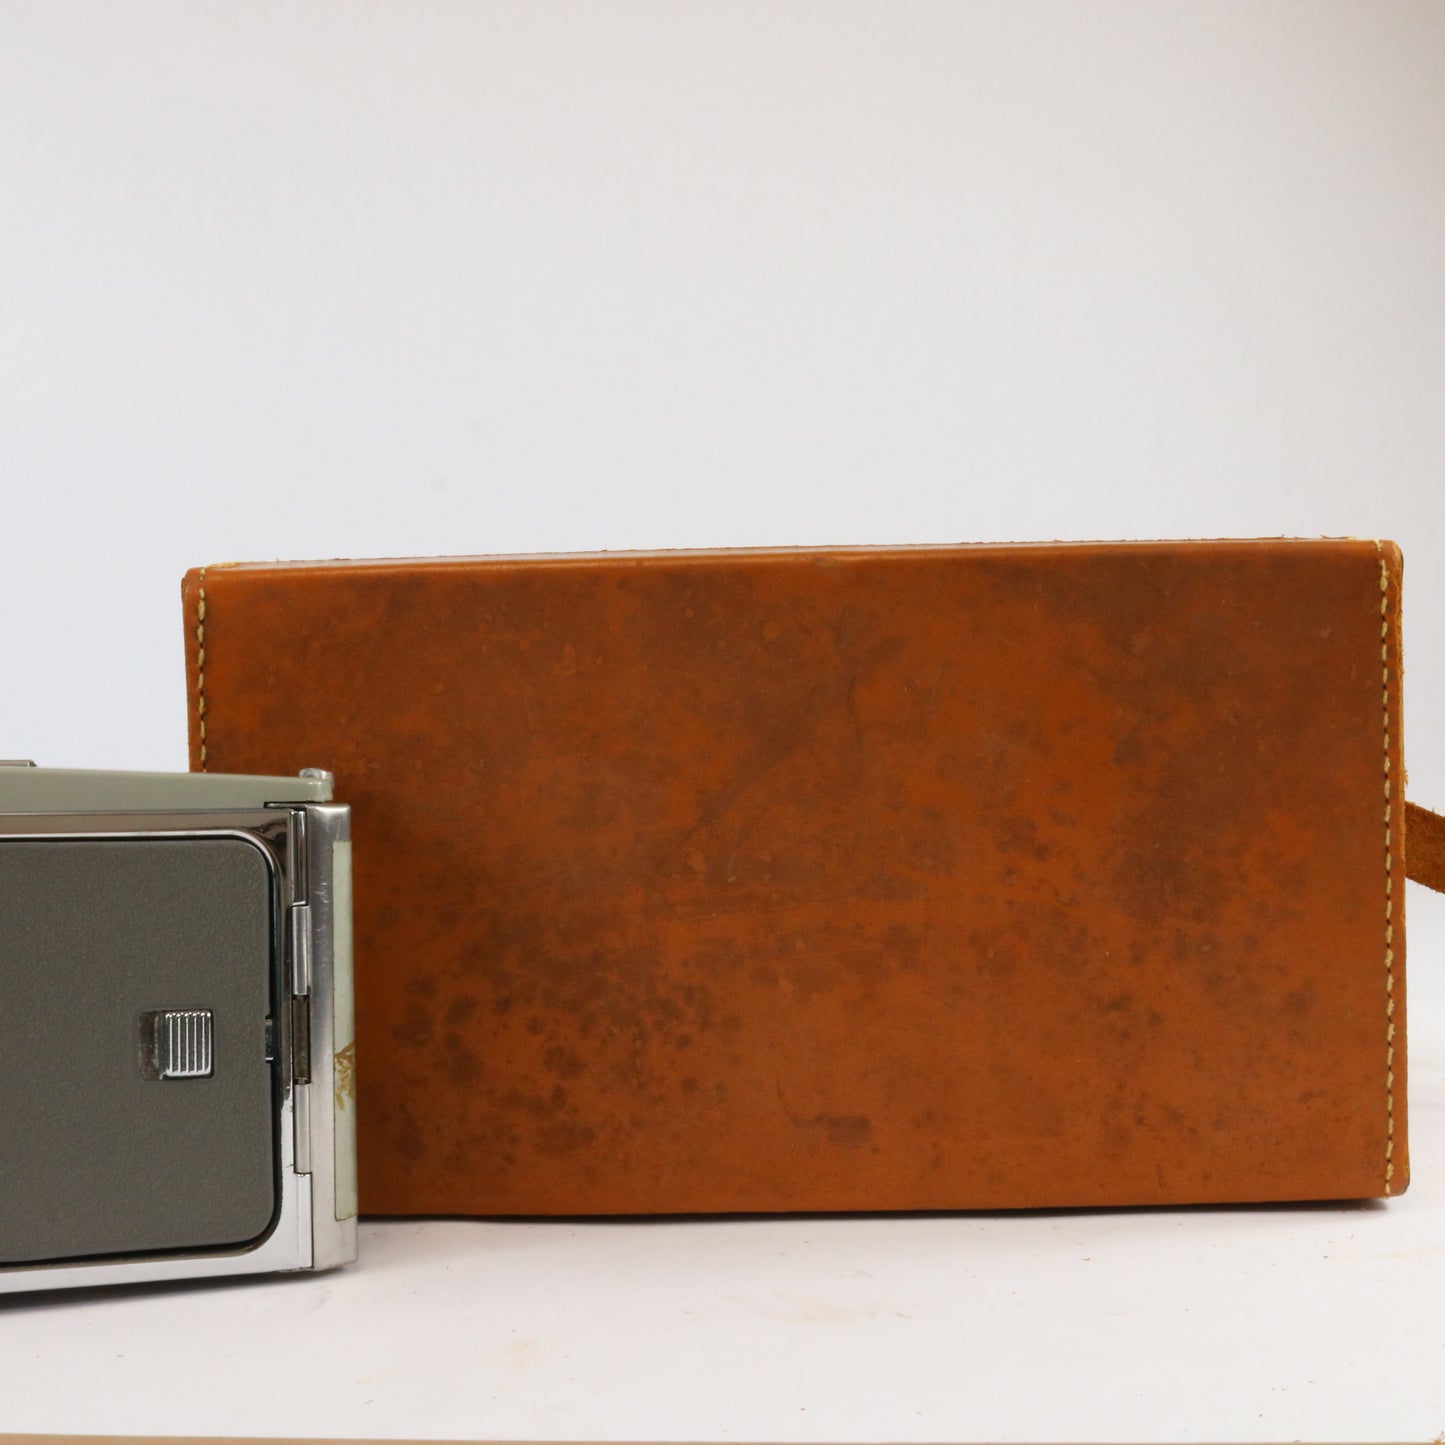 Polaroid Land Camera Model 80